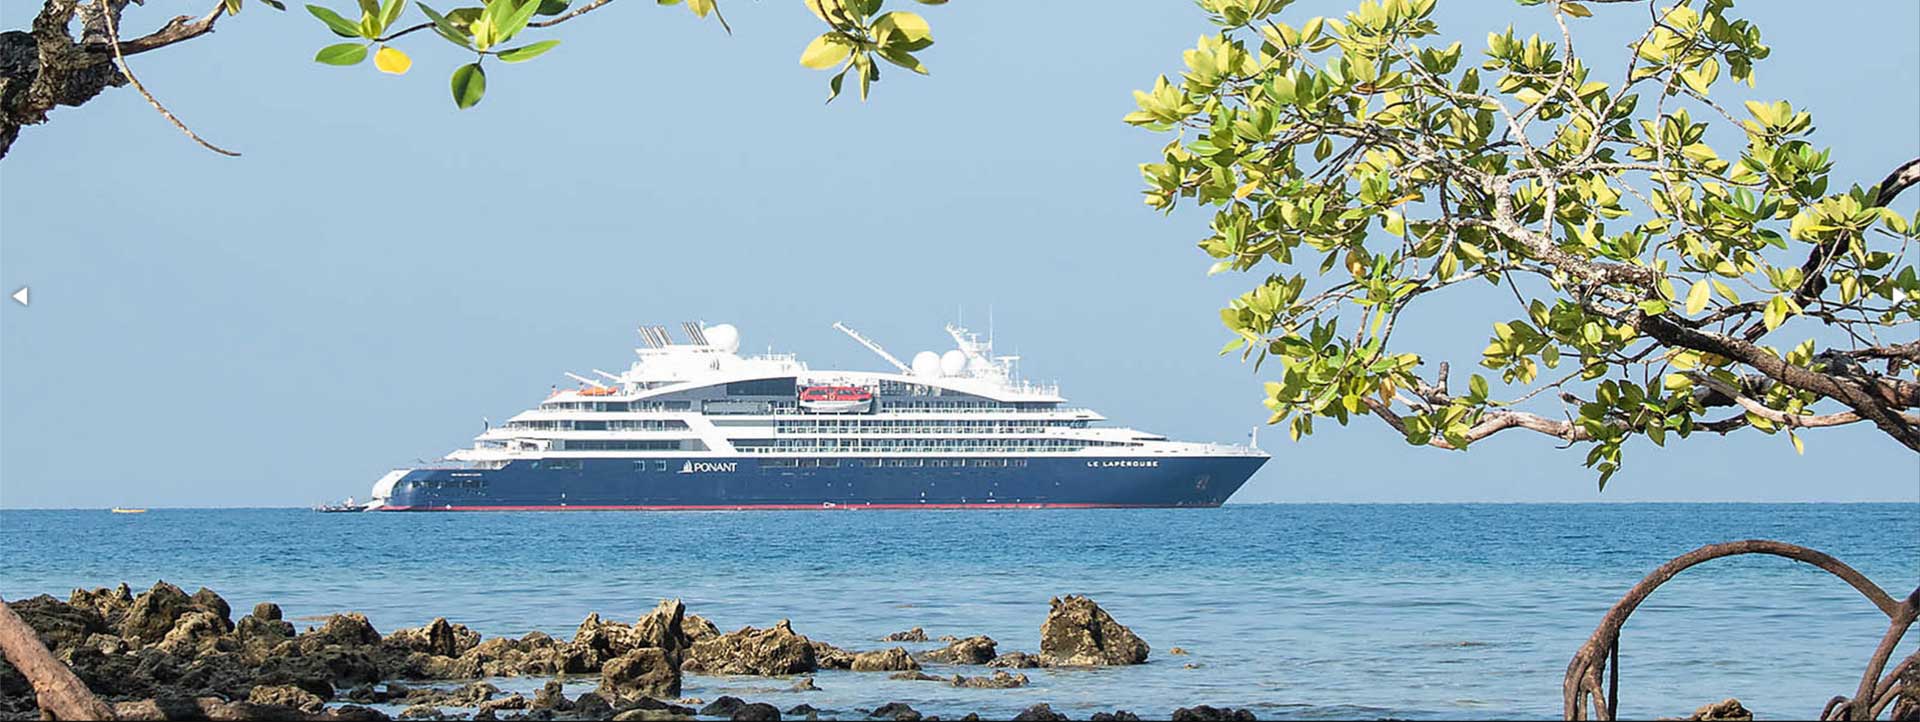 LE-BELLOT-cruise-dates-kimberley-cruises-2021-&-2022-slider